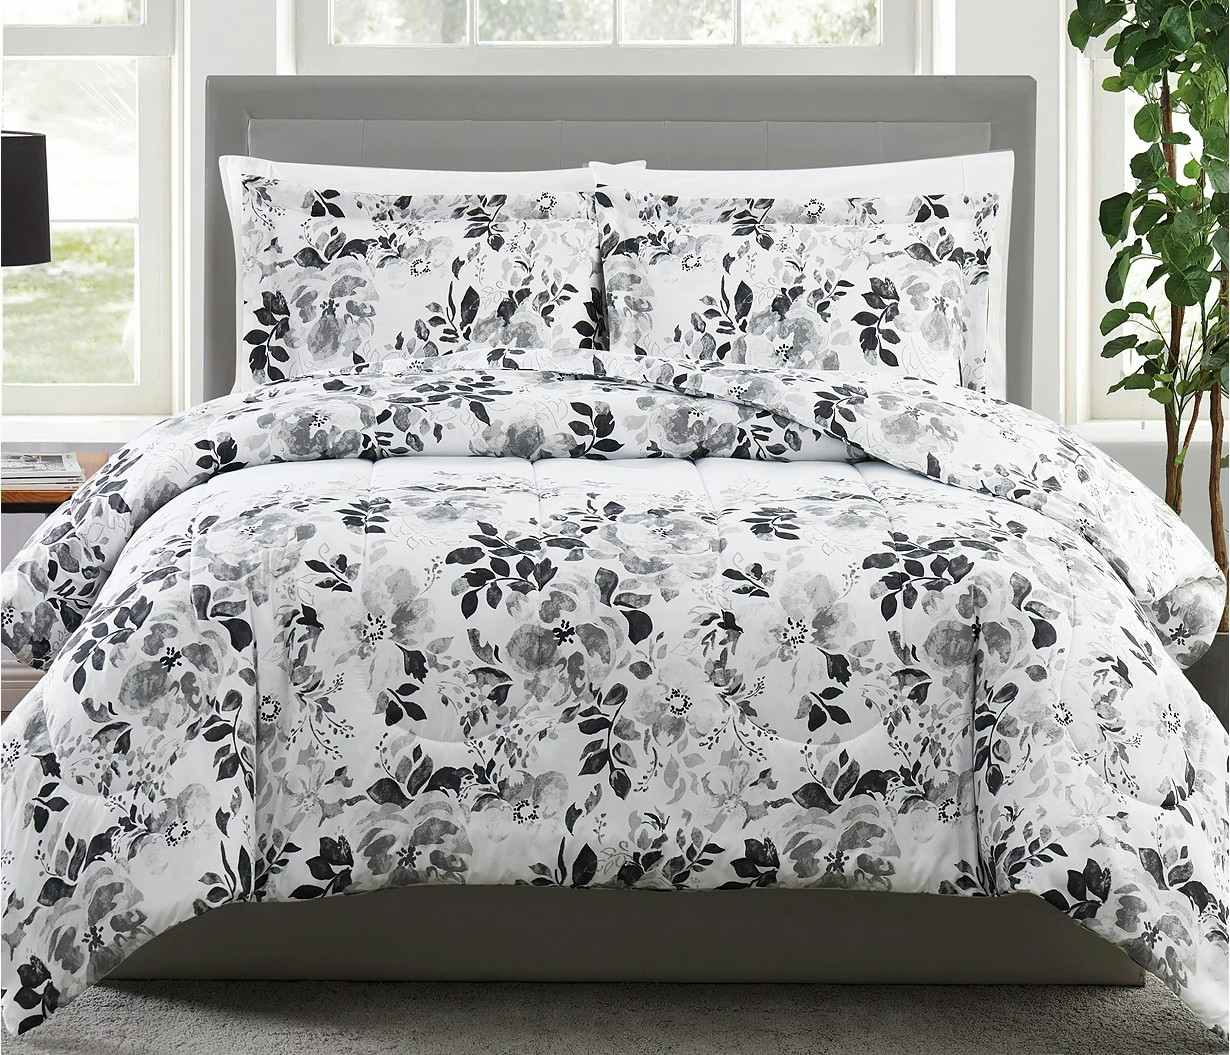 macys-3-piece-comforter-set-110921-a